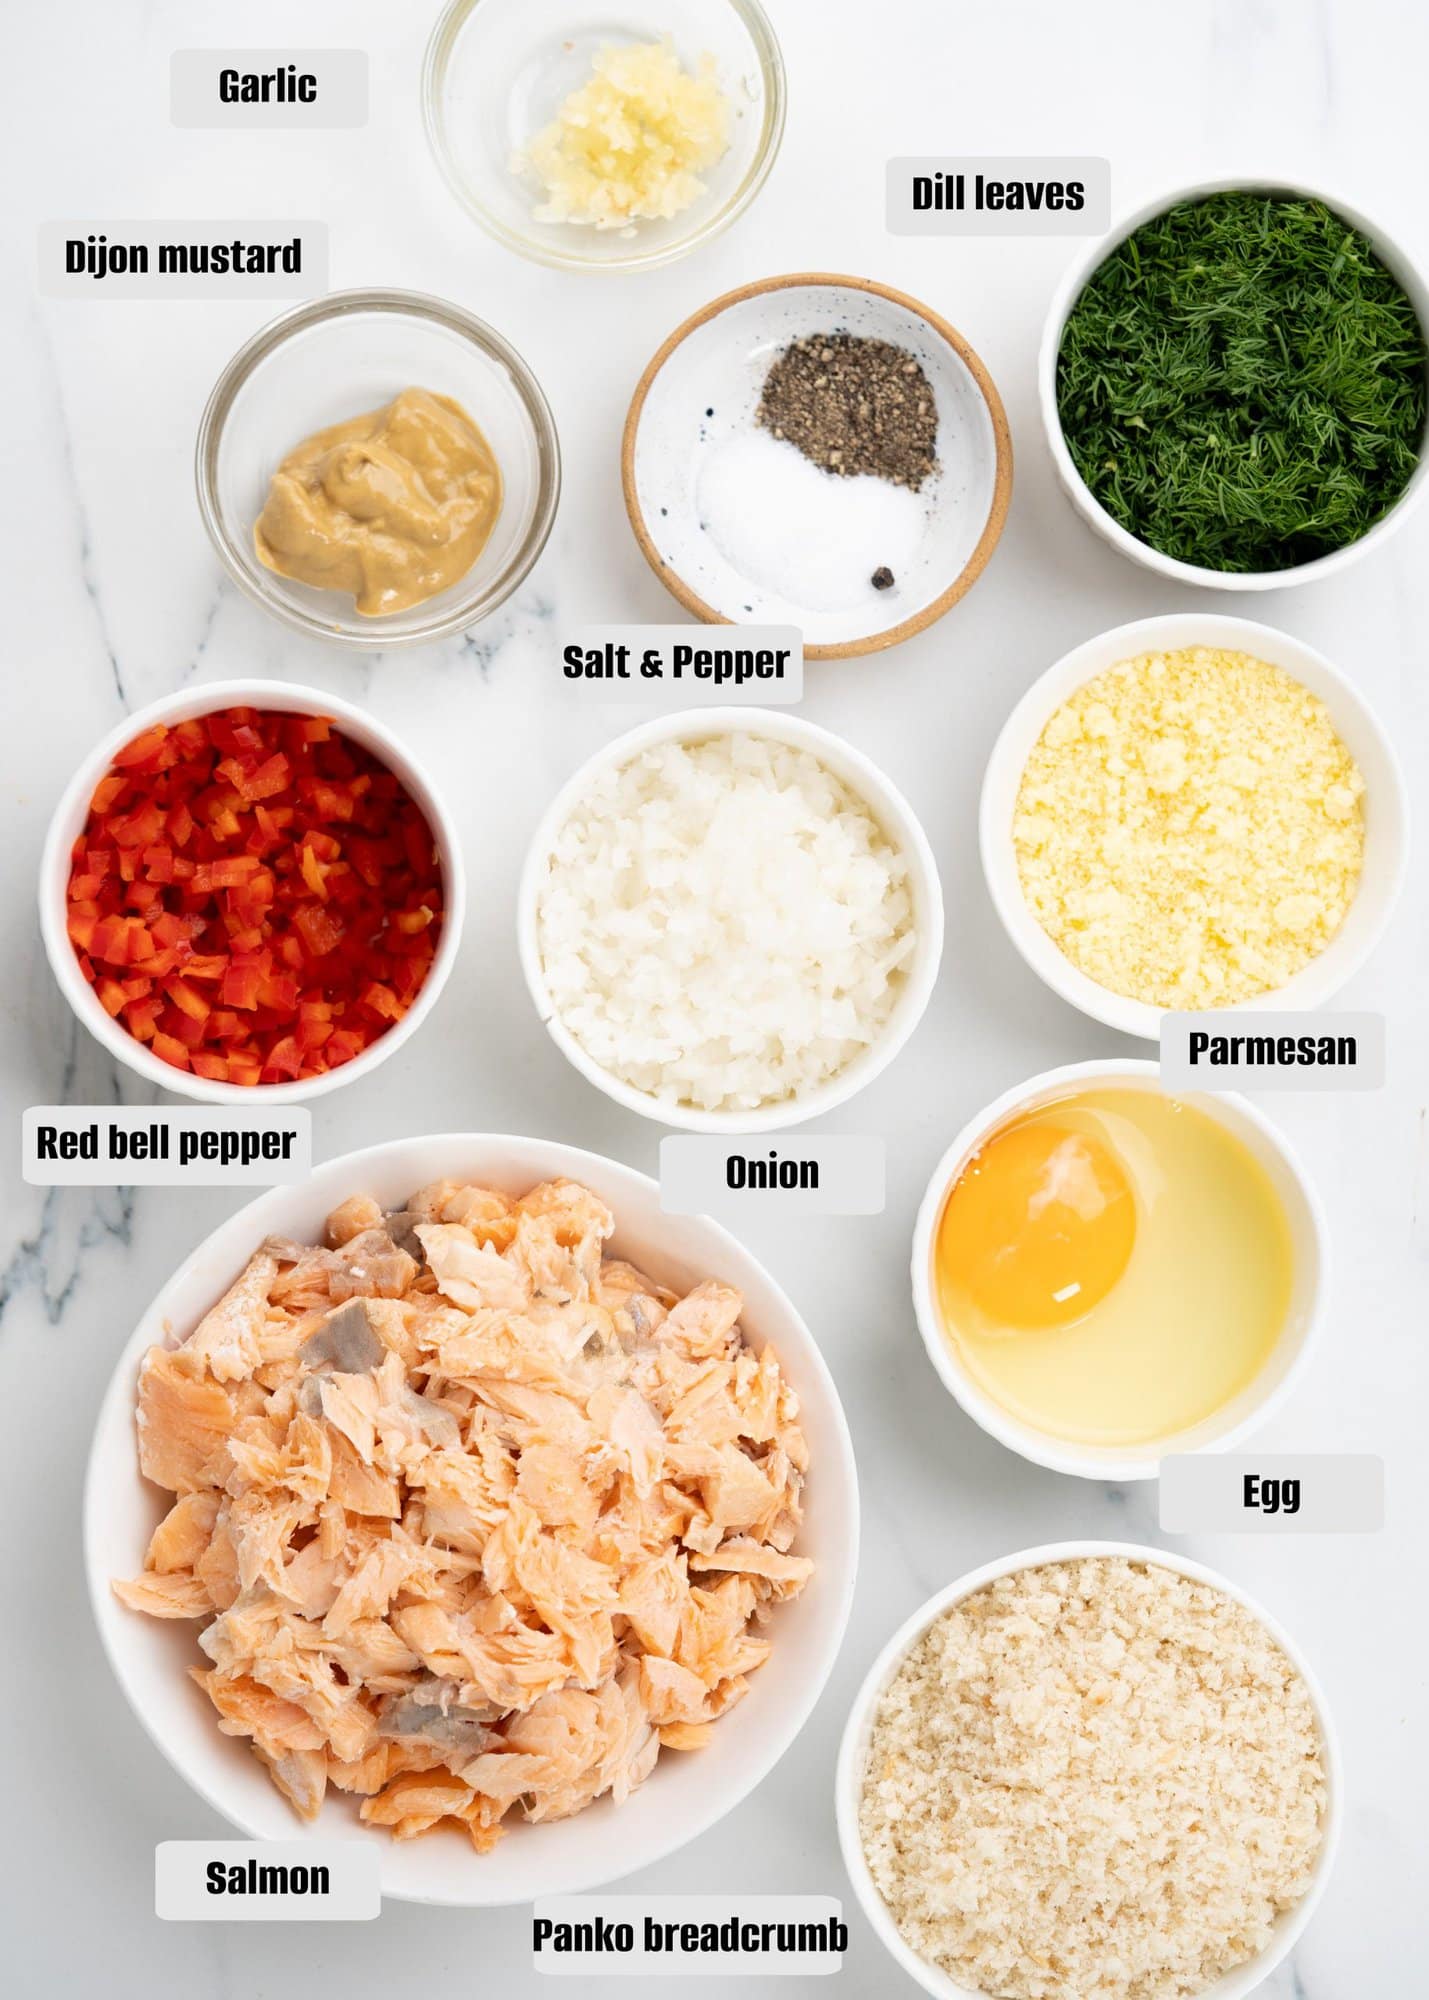 Ingredients for Salmon patties
: salmon,panko breadcrumb,egg,parmesan,onion,red bell pepper,salt n& pepper,dill leaves, dijon mustard and garlic